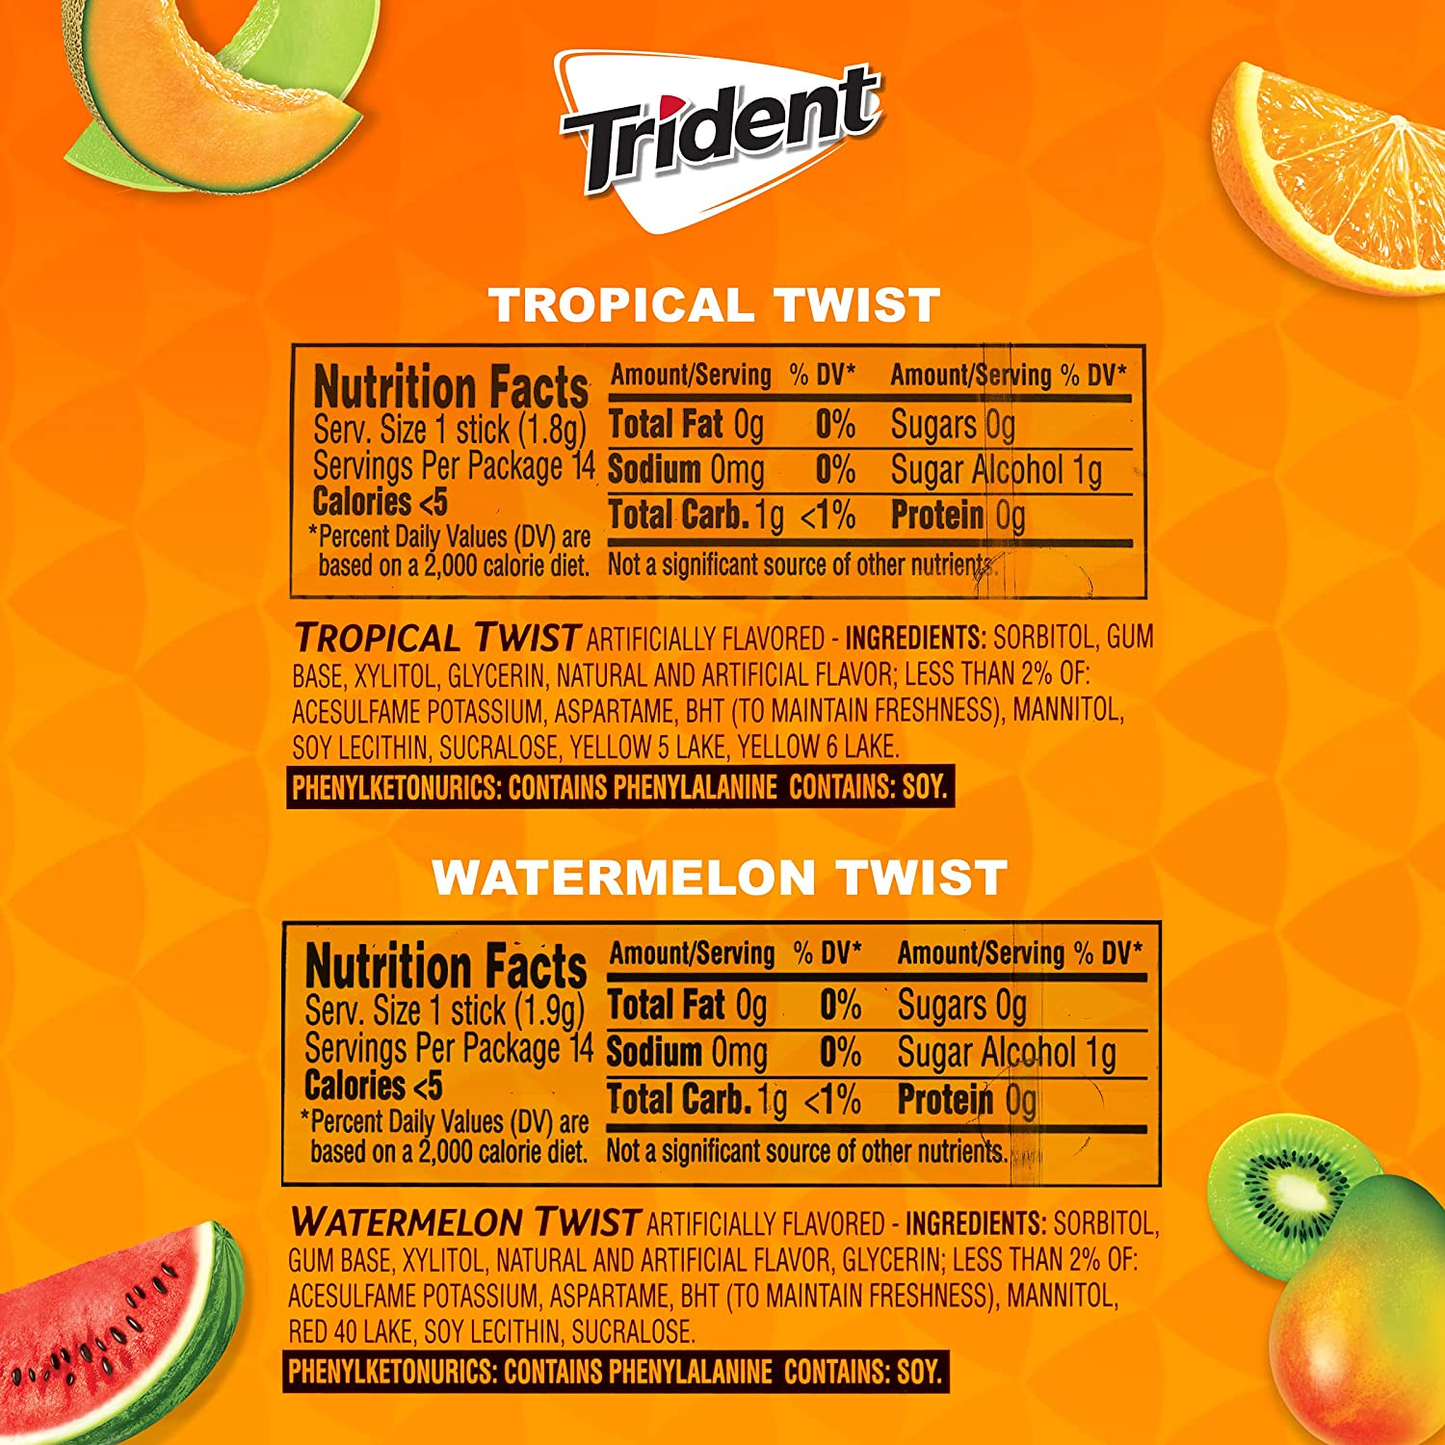 Trident Sugar Free Gum Variety Pack, Watermelon Twist & Tropical Twist Flavors, 15 Packs (210 Pieces Total)